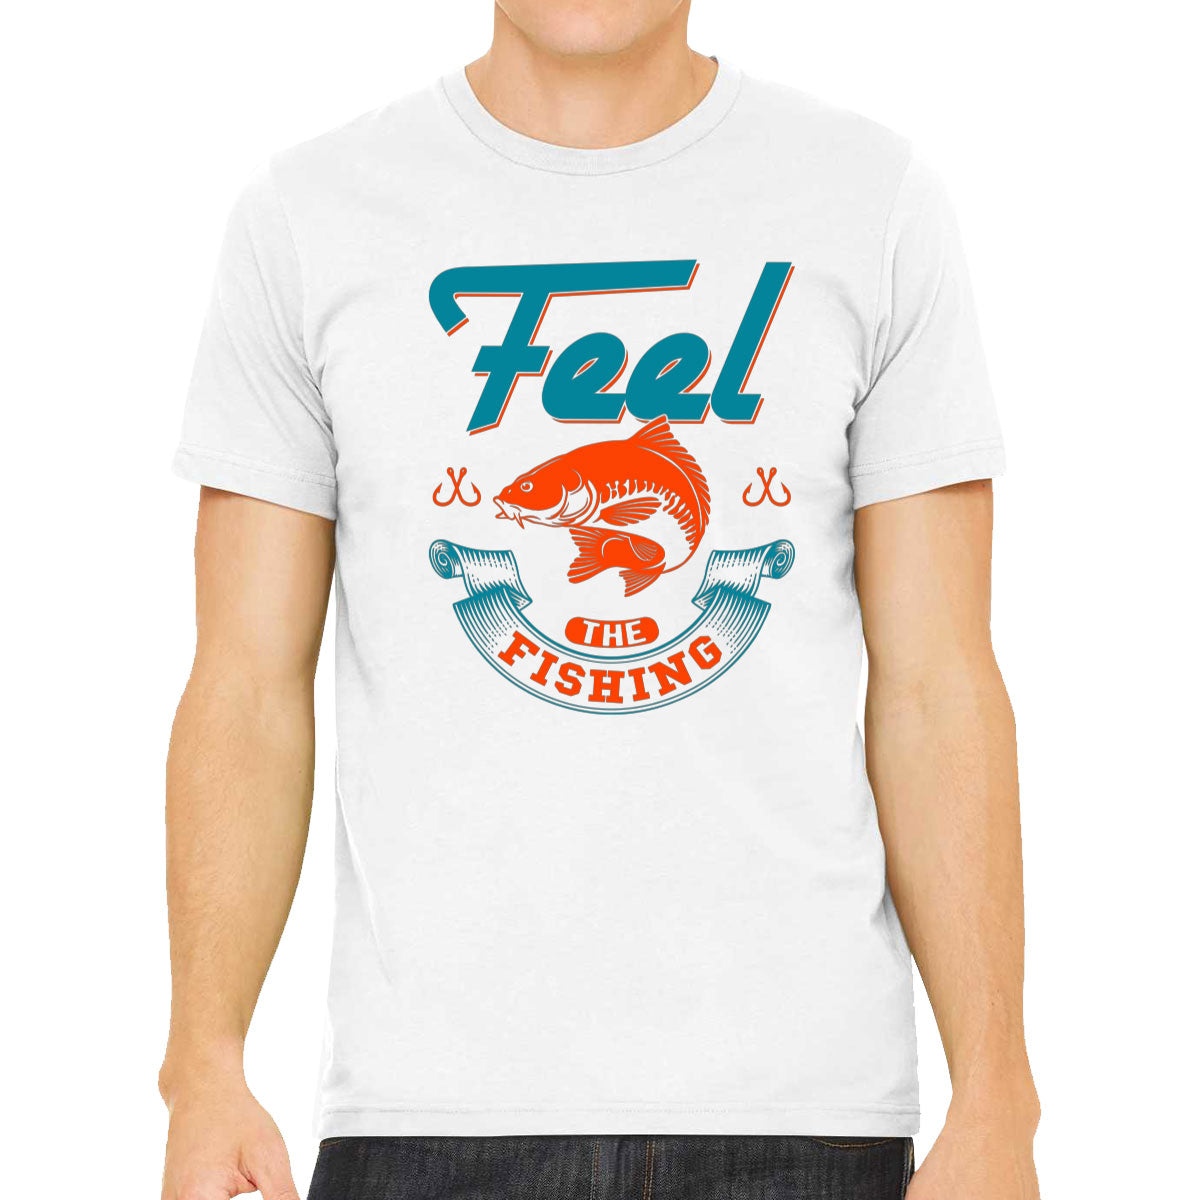 Feel The Fishing Men's T-shirt